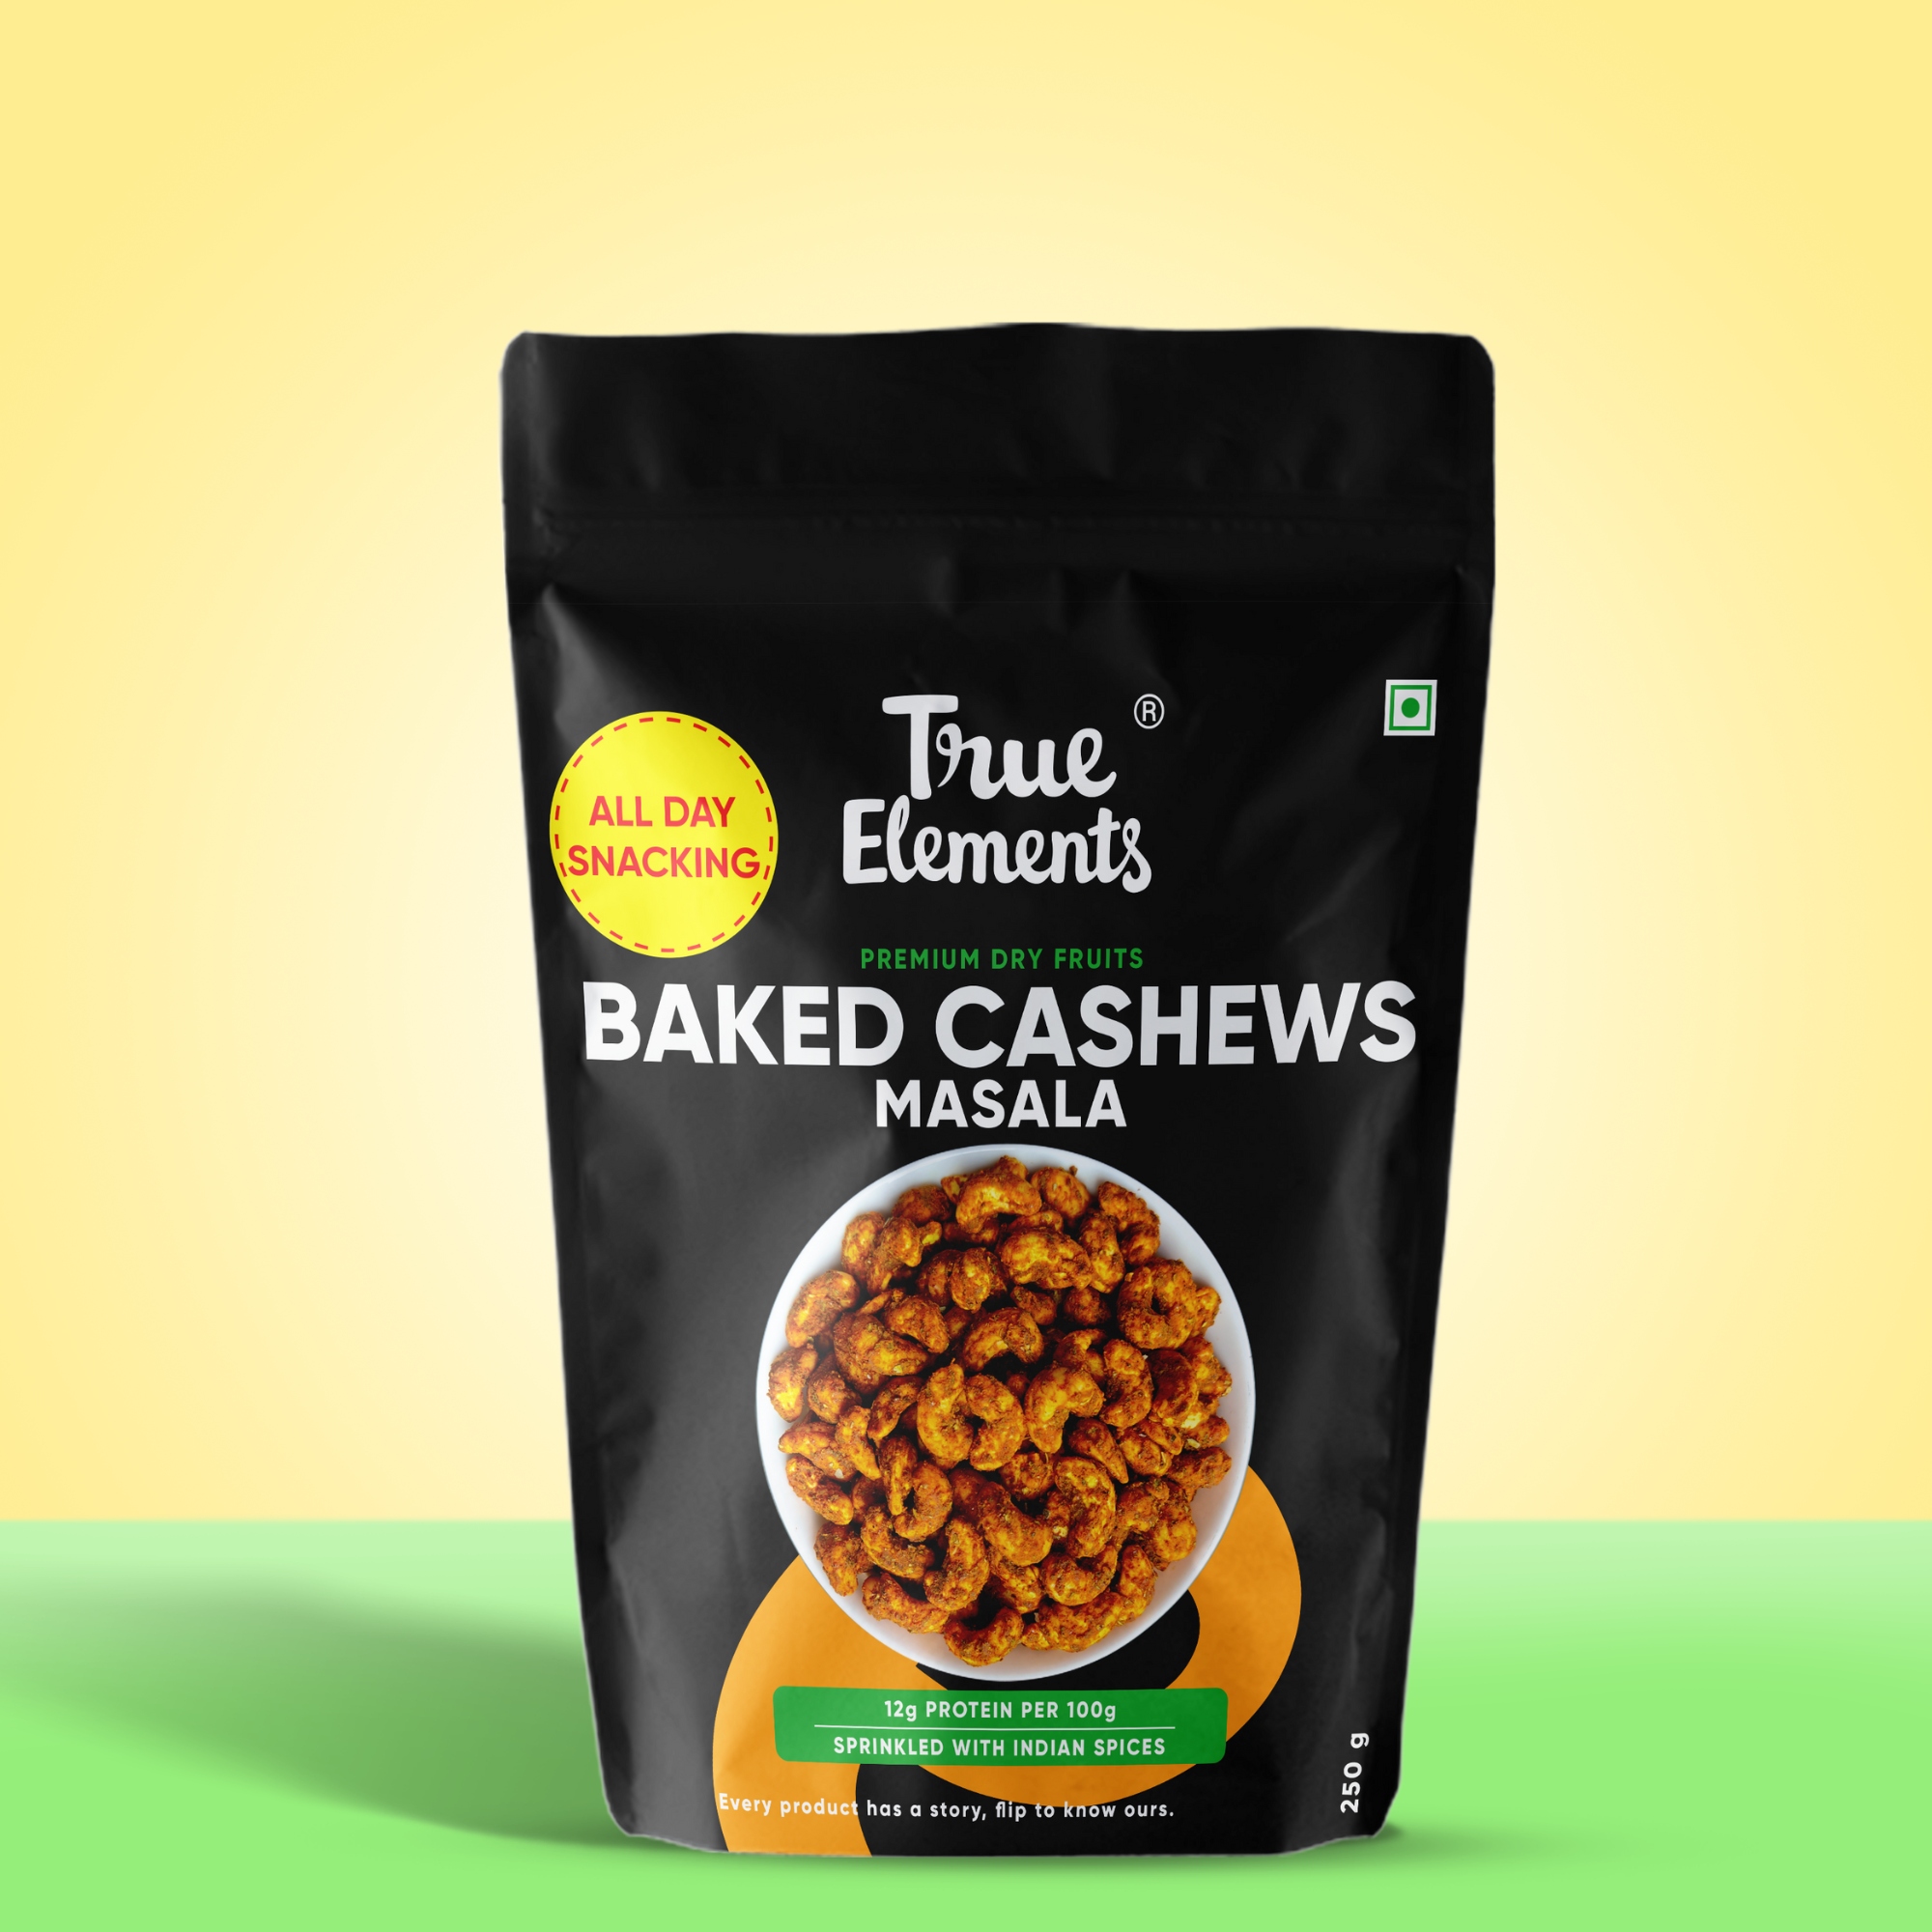 True Elements Baked Cashews Masala